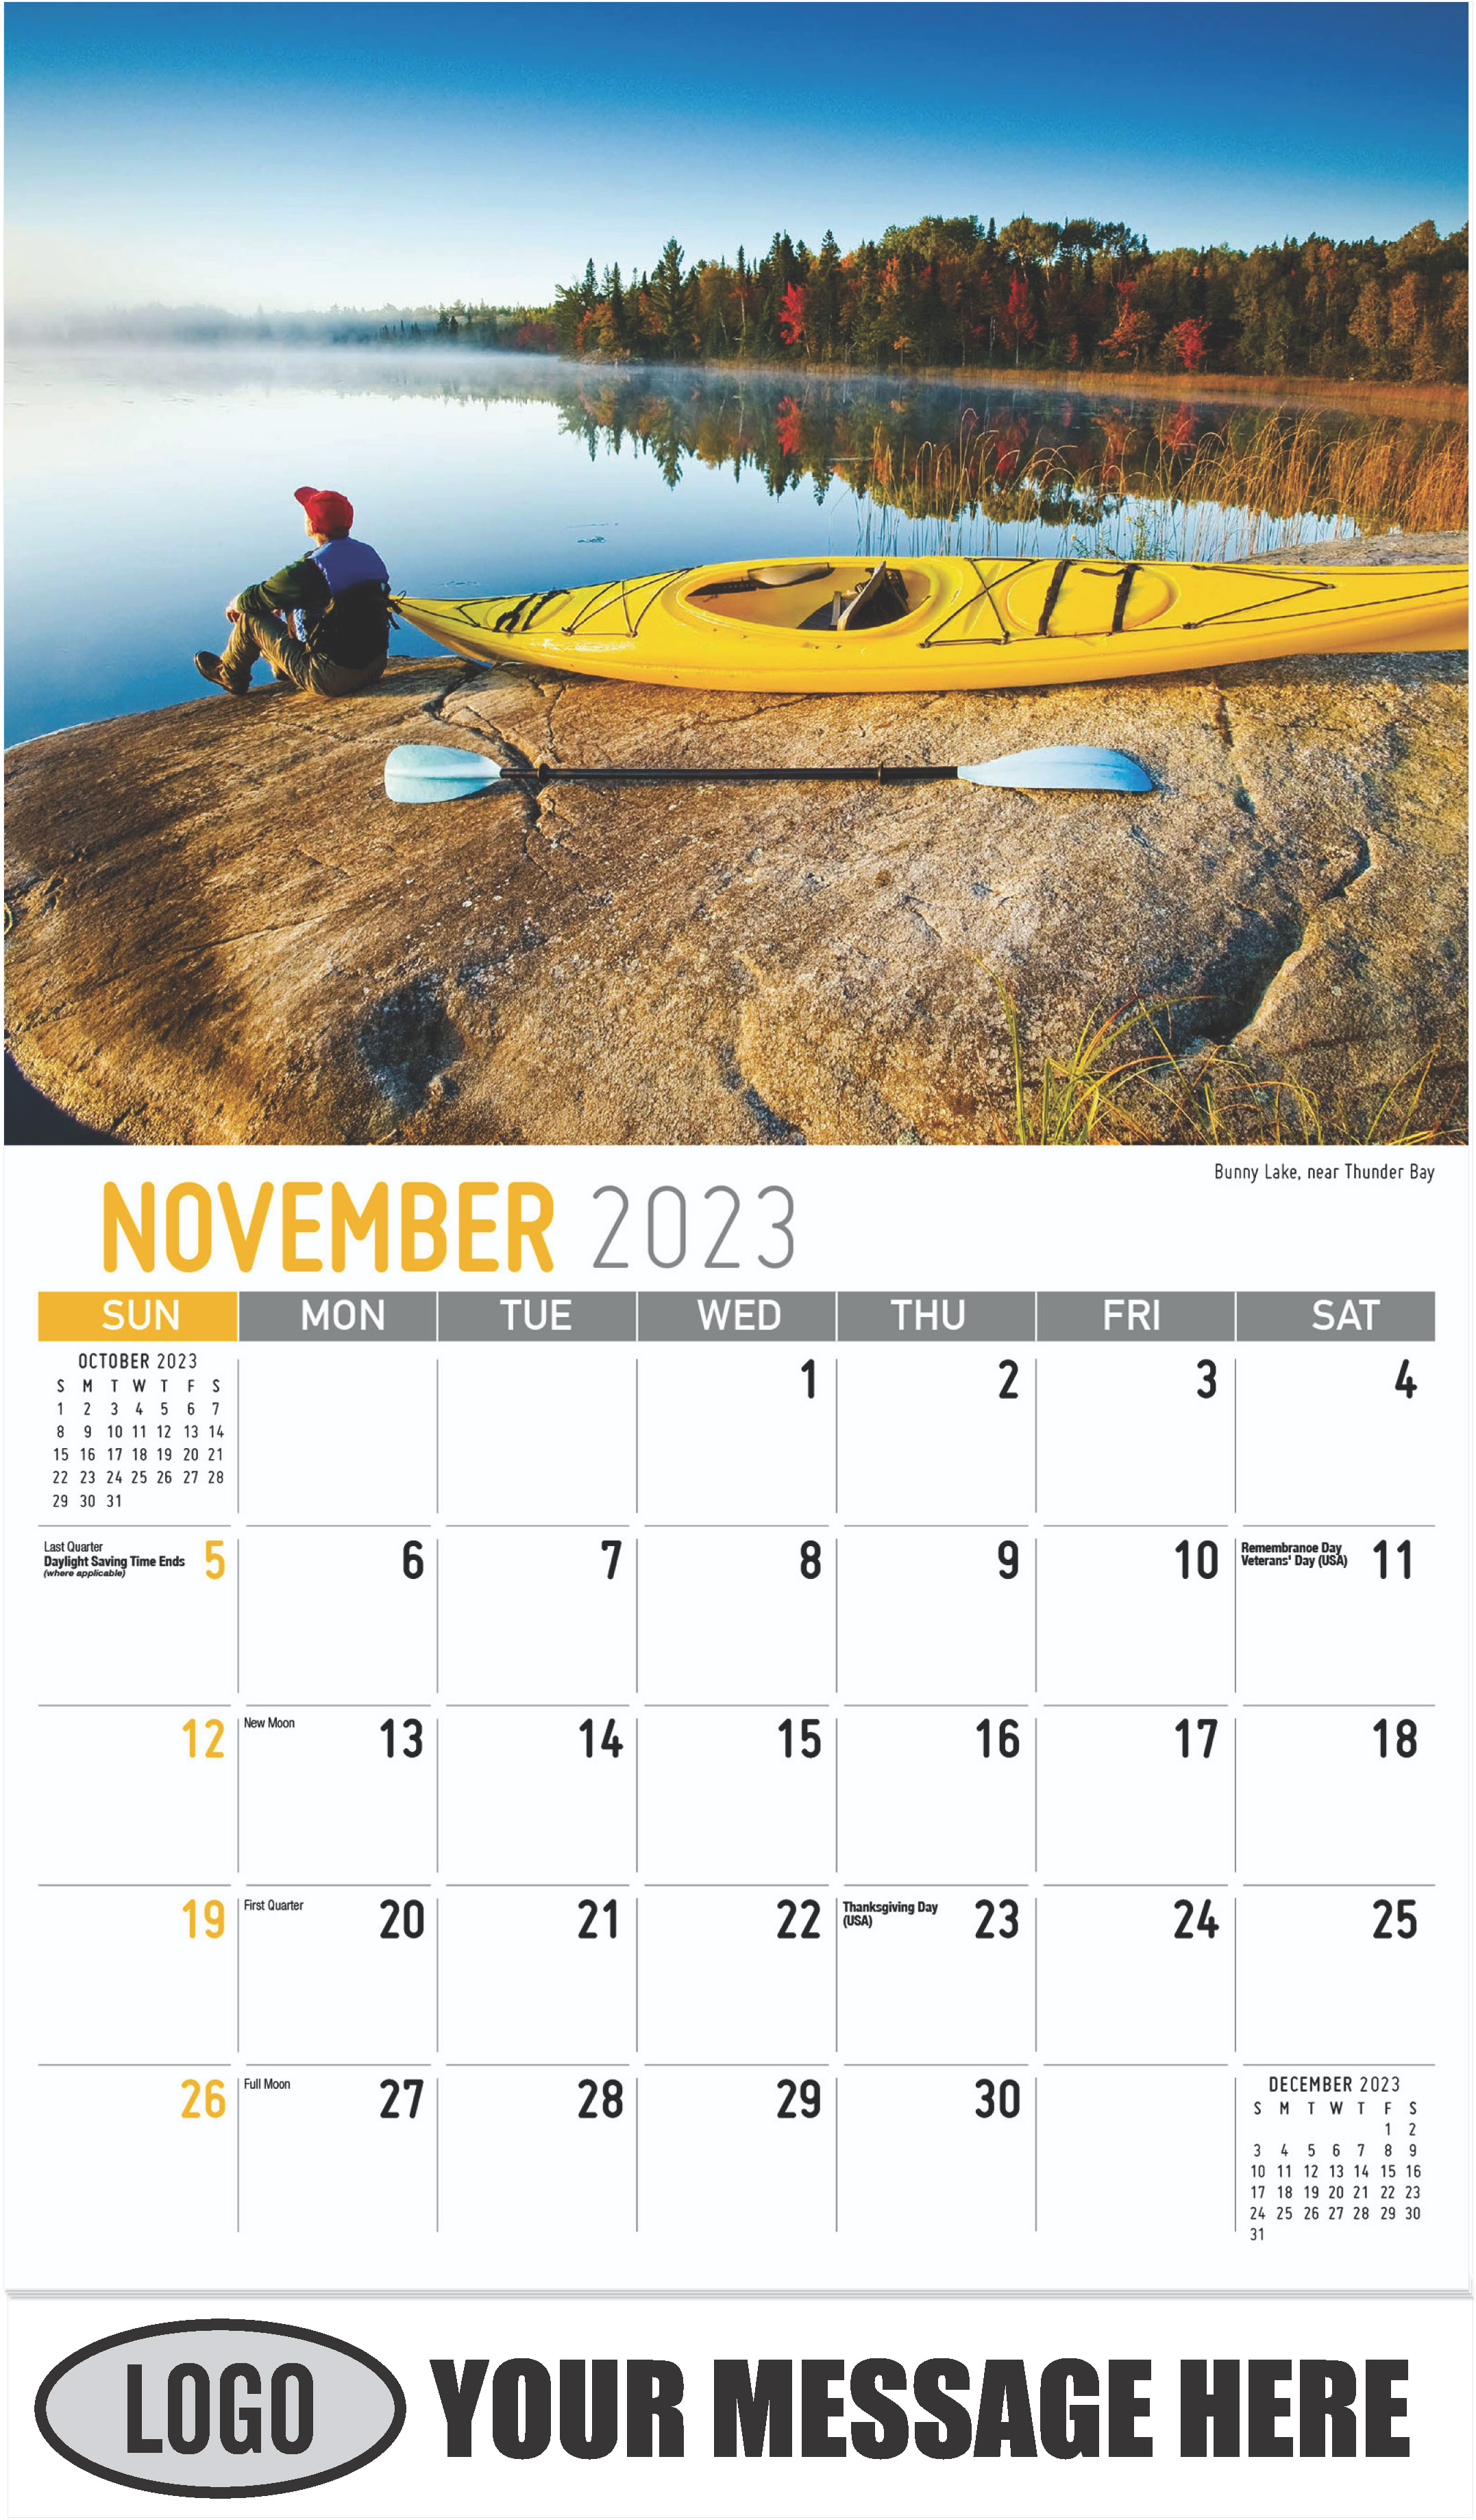 Bunny Lake, near Thunder Bay - November - Scenes of Ontario 2023 Promotional Calendar